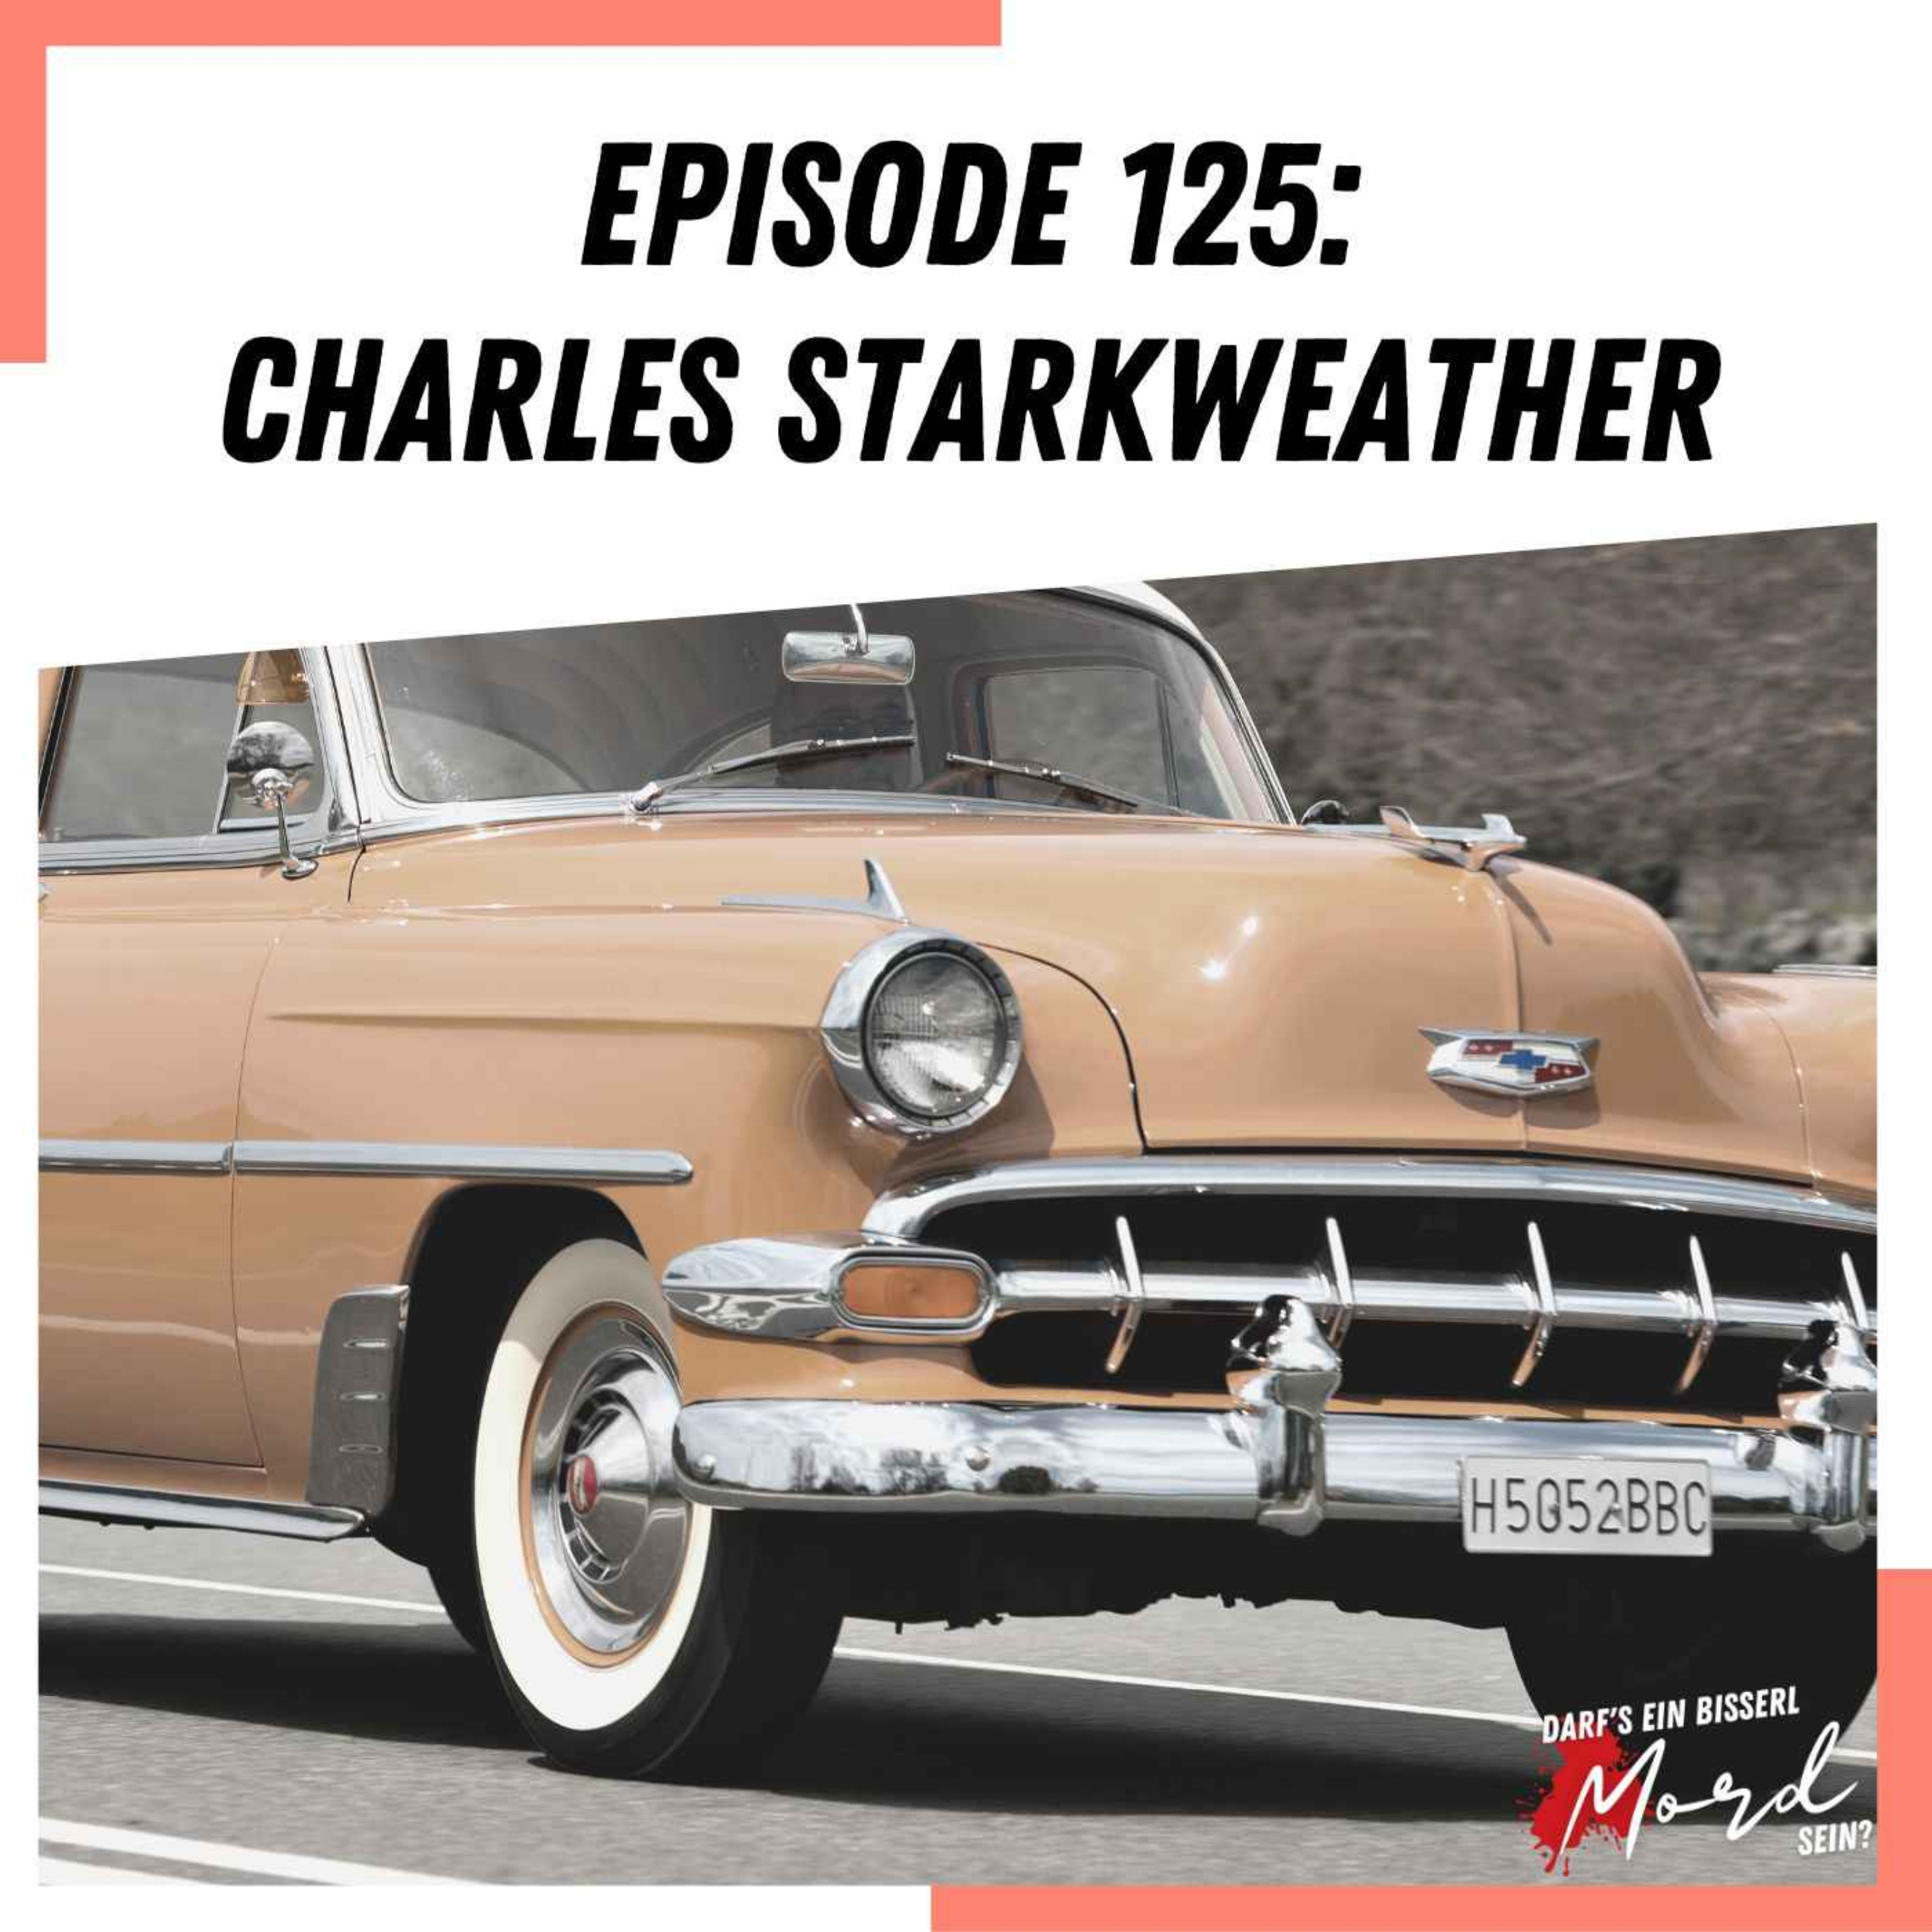 Episode 125: Charles Starkweather (2/2)